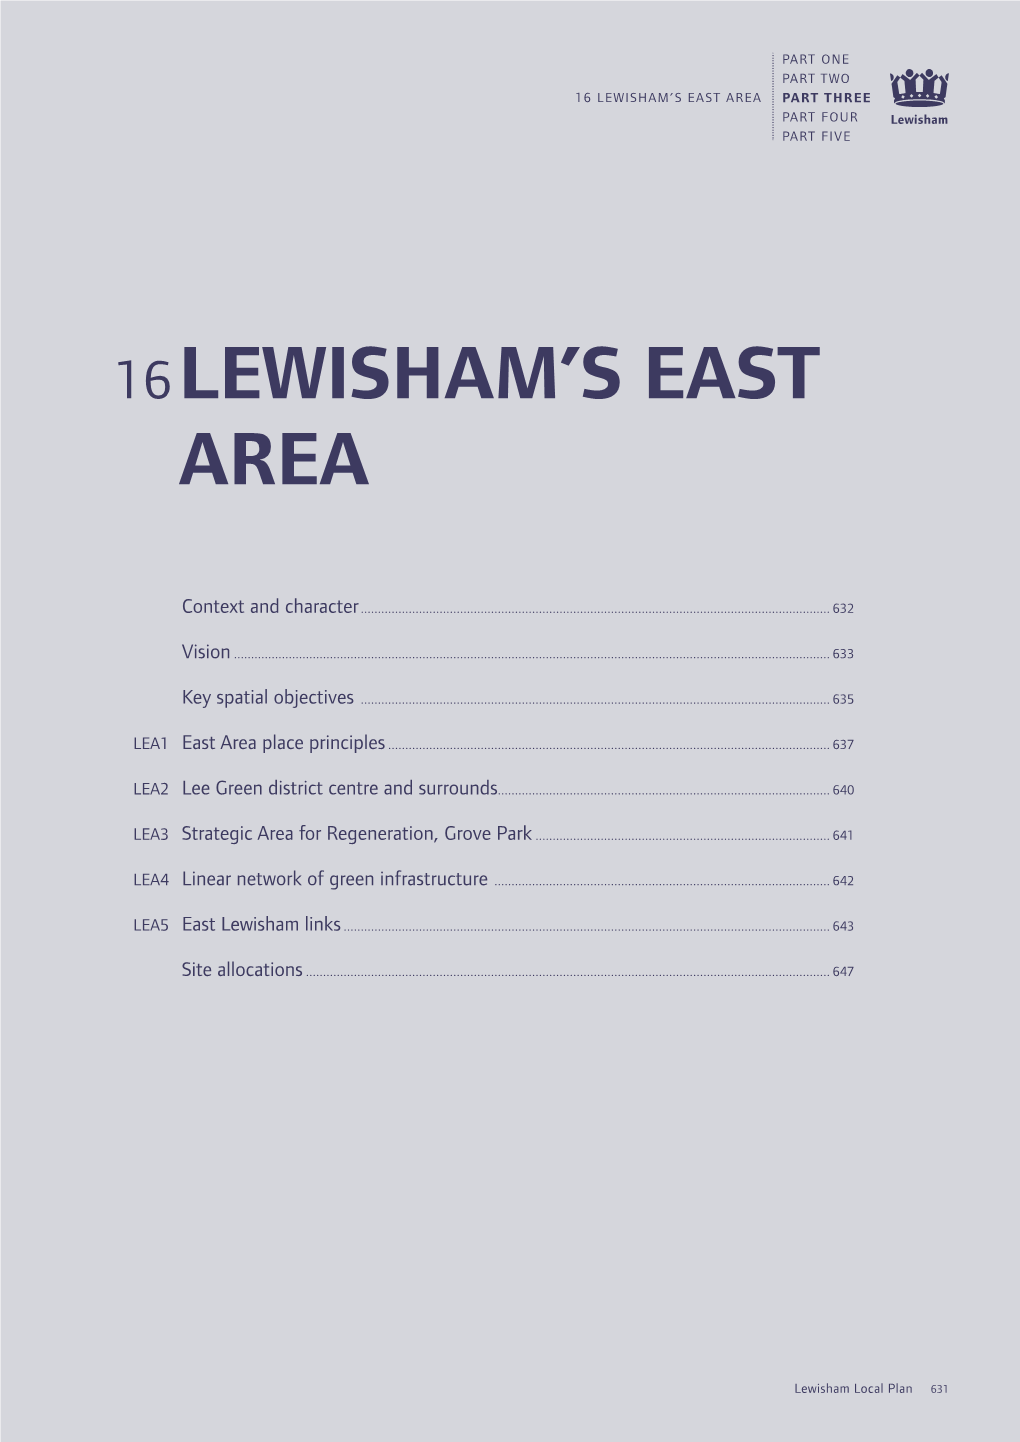 Lewisham Local Plan 631 Context and Character